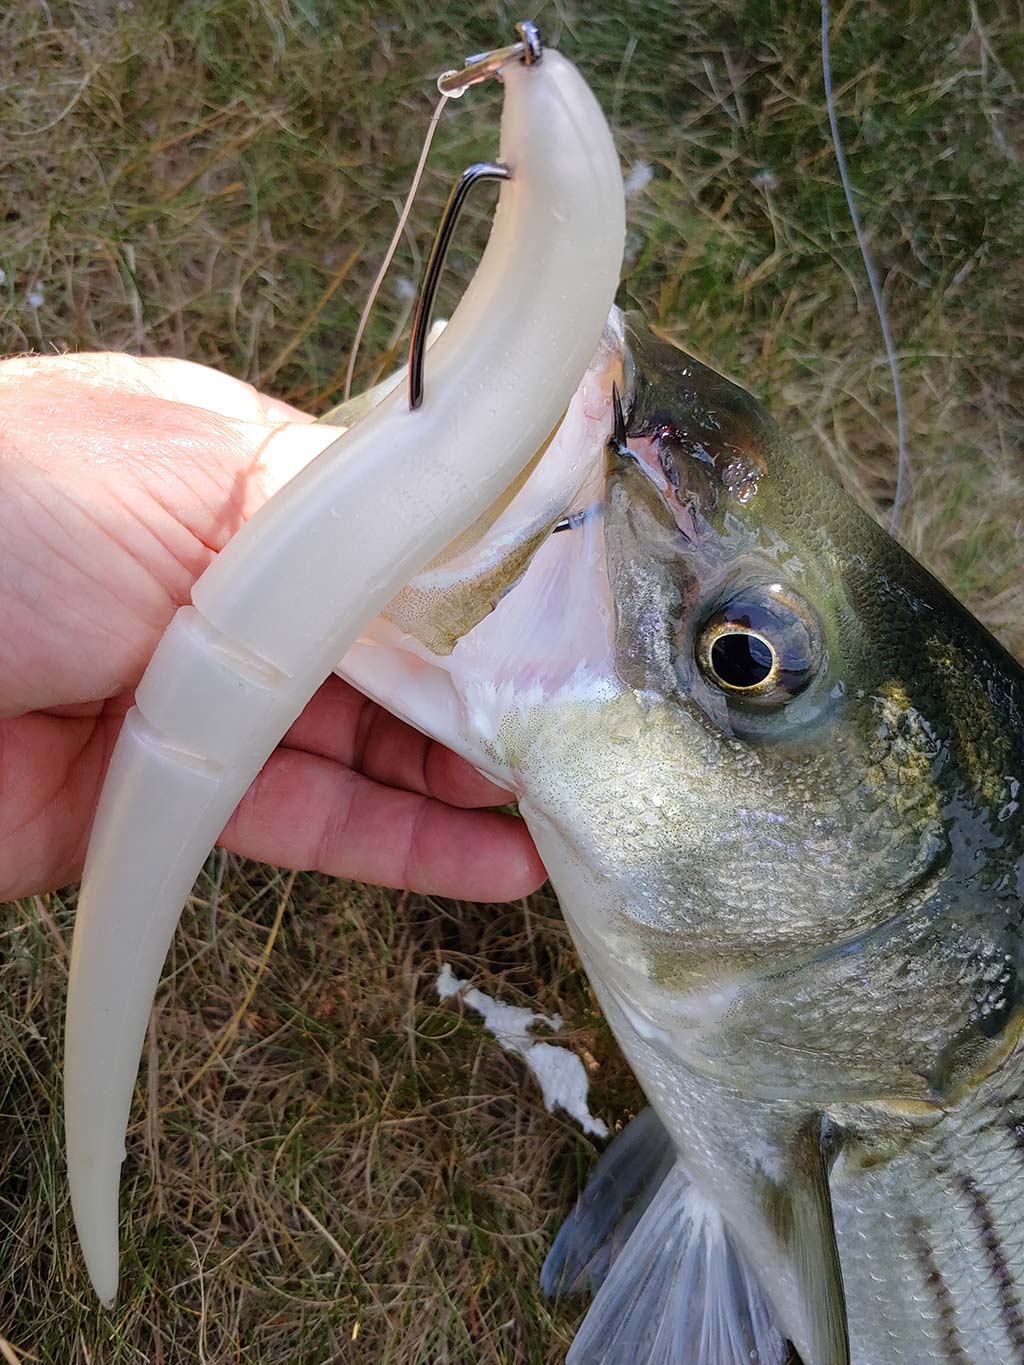 Hooking Striped Bass on Large Soft Plastics